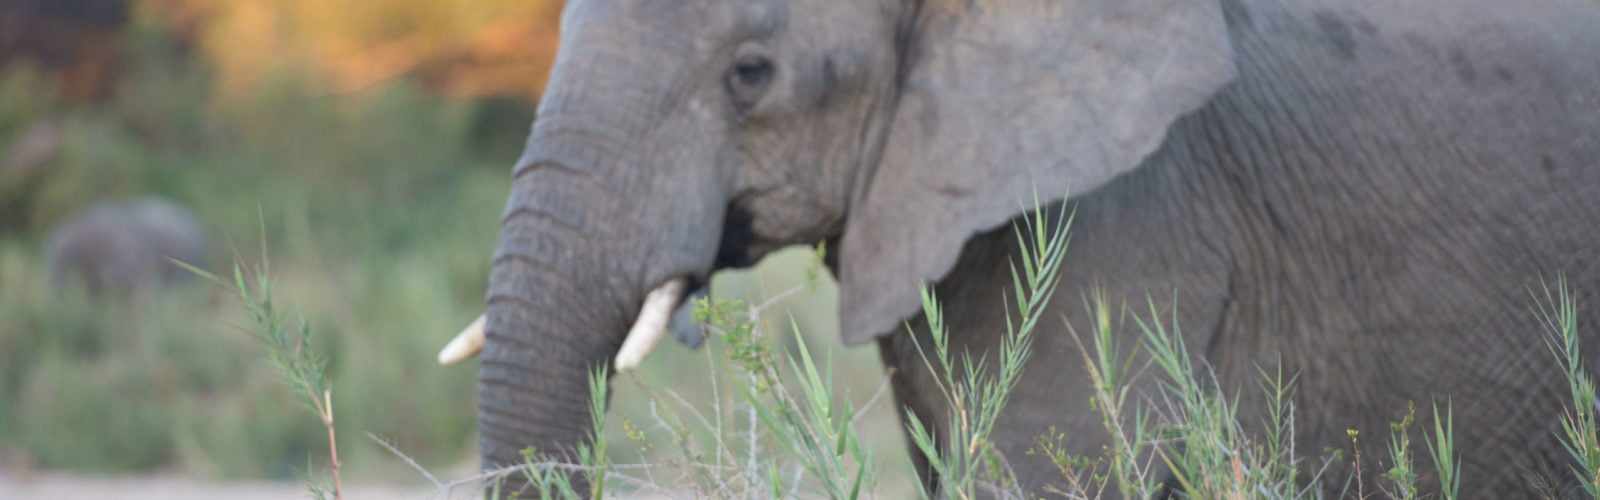 Elephant eating grass, Africa